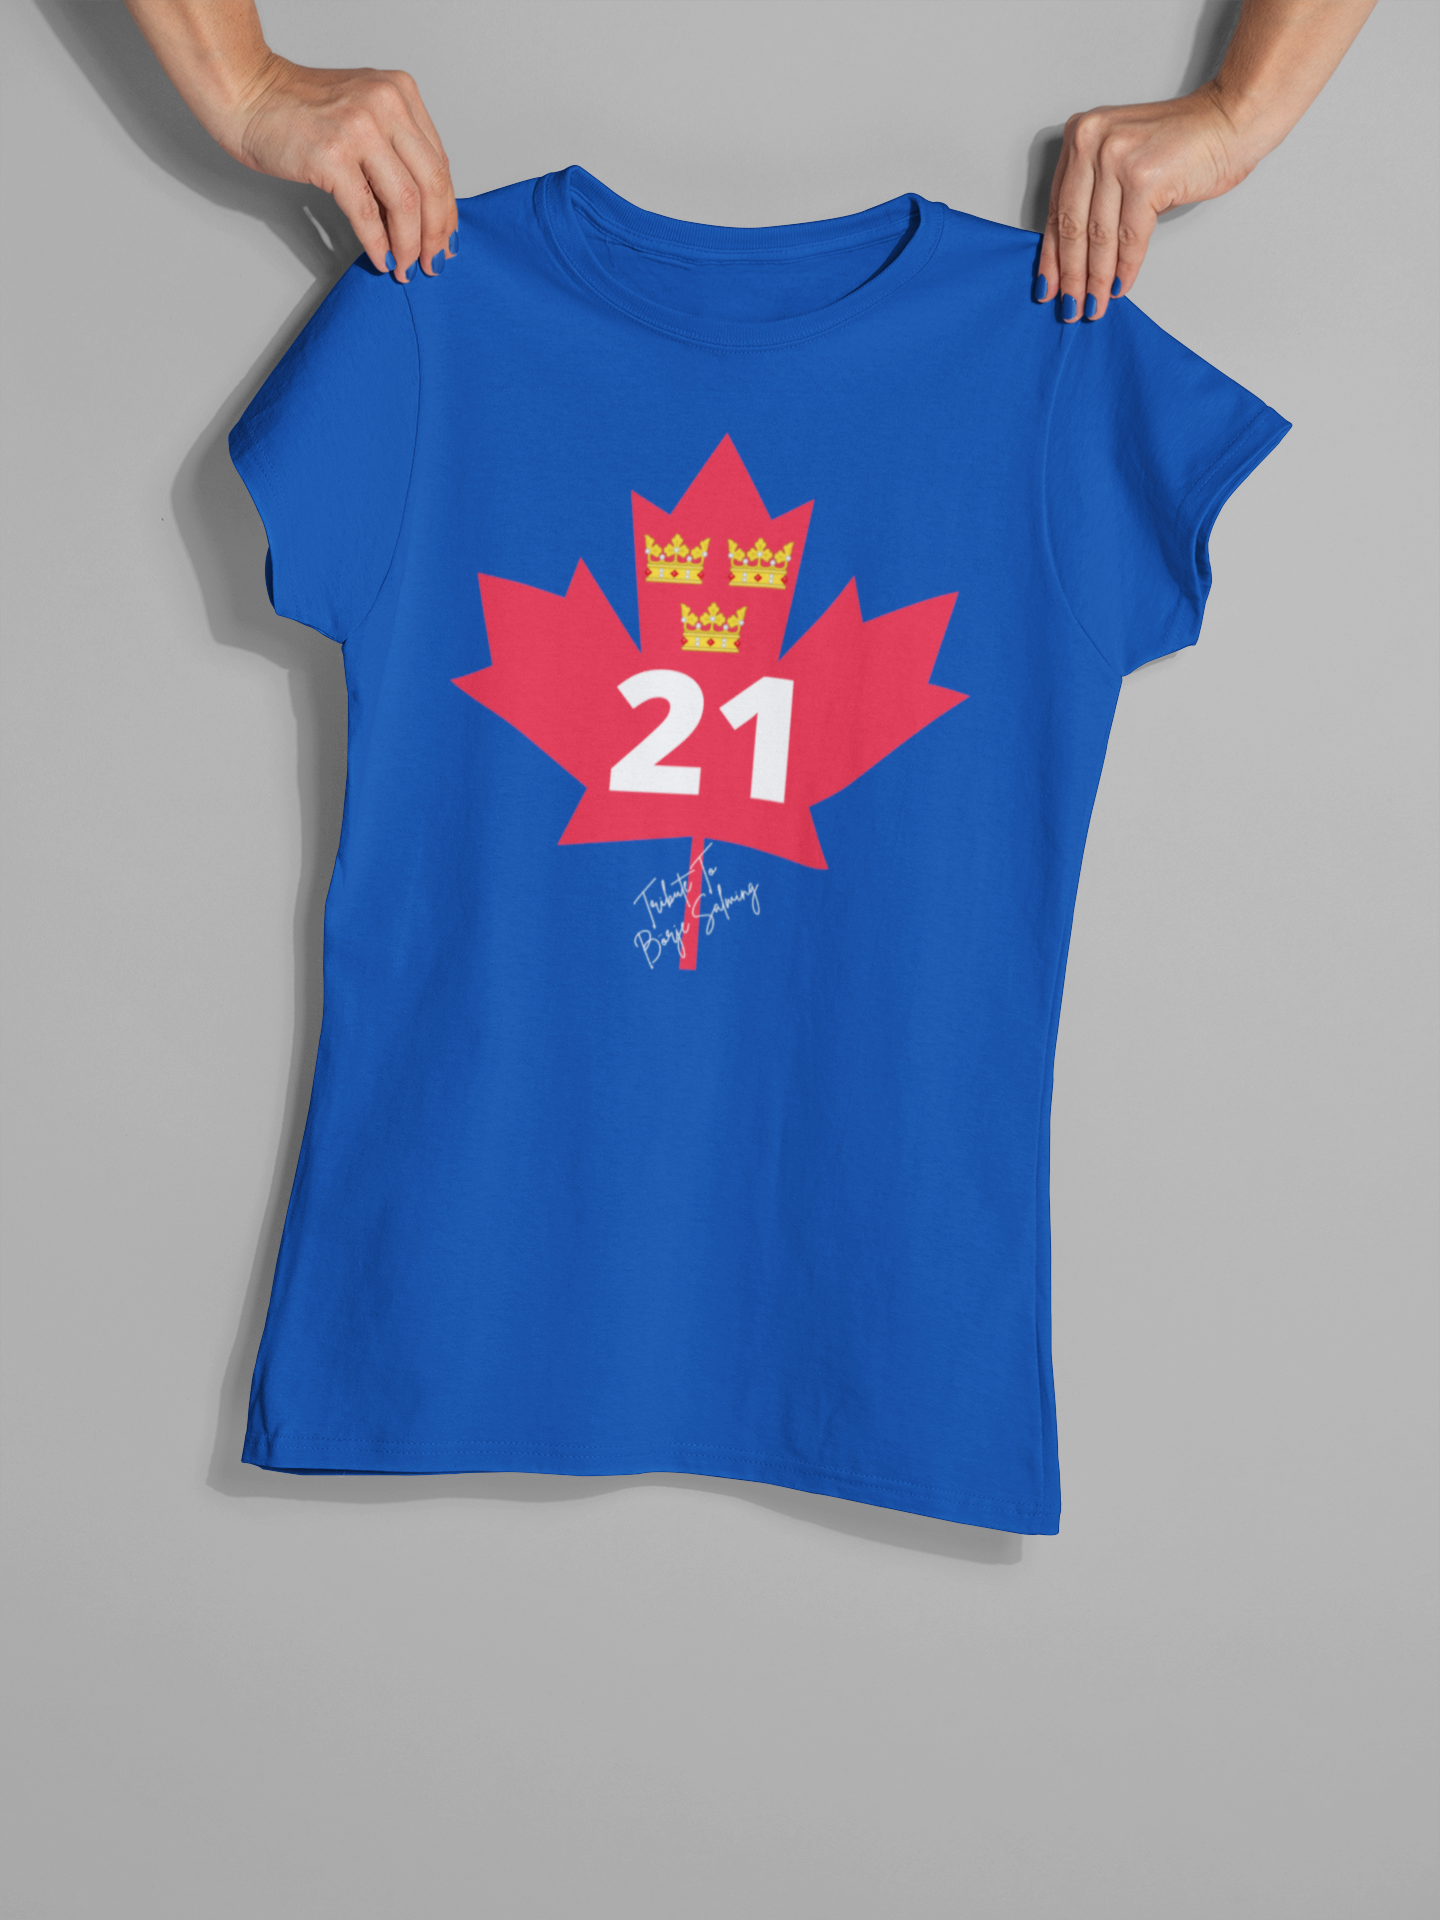 Borje Salming Women's T-Shirt - Heather Gray - Toronto | 500 Level